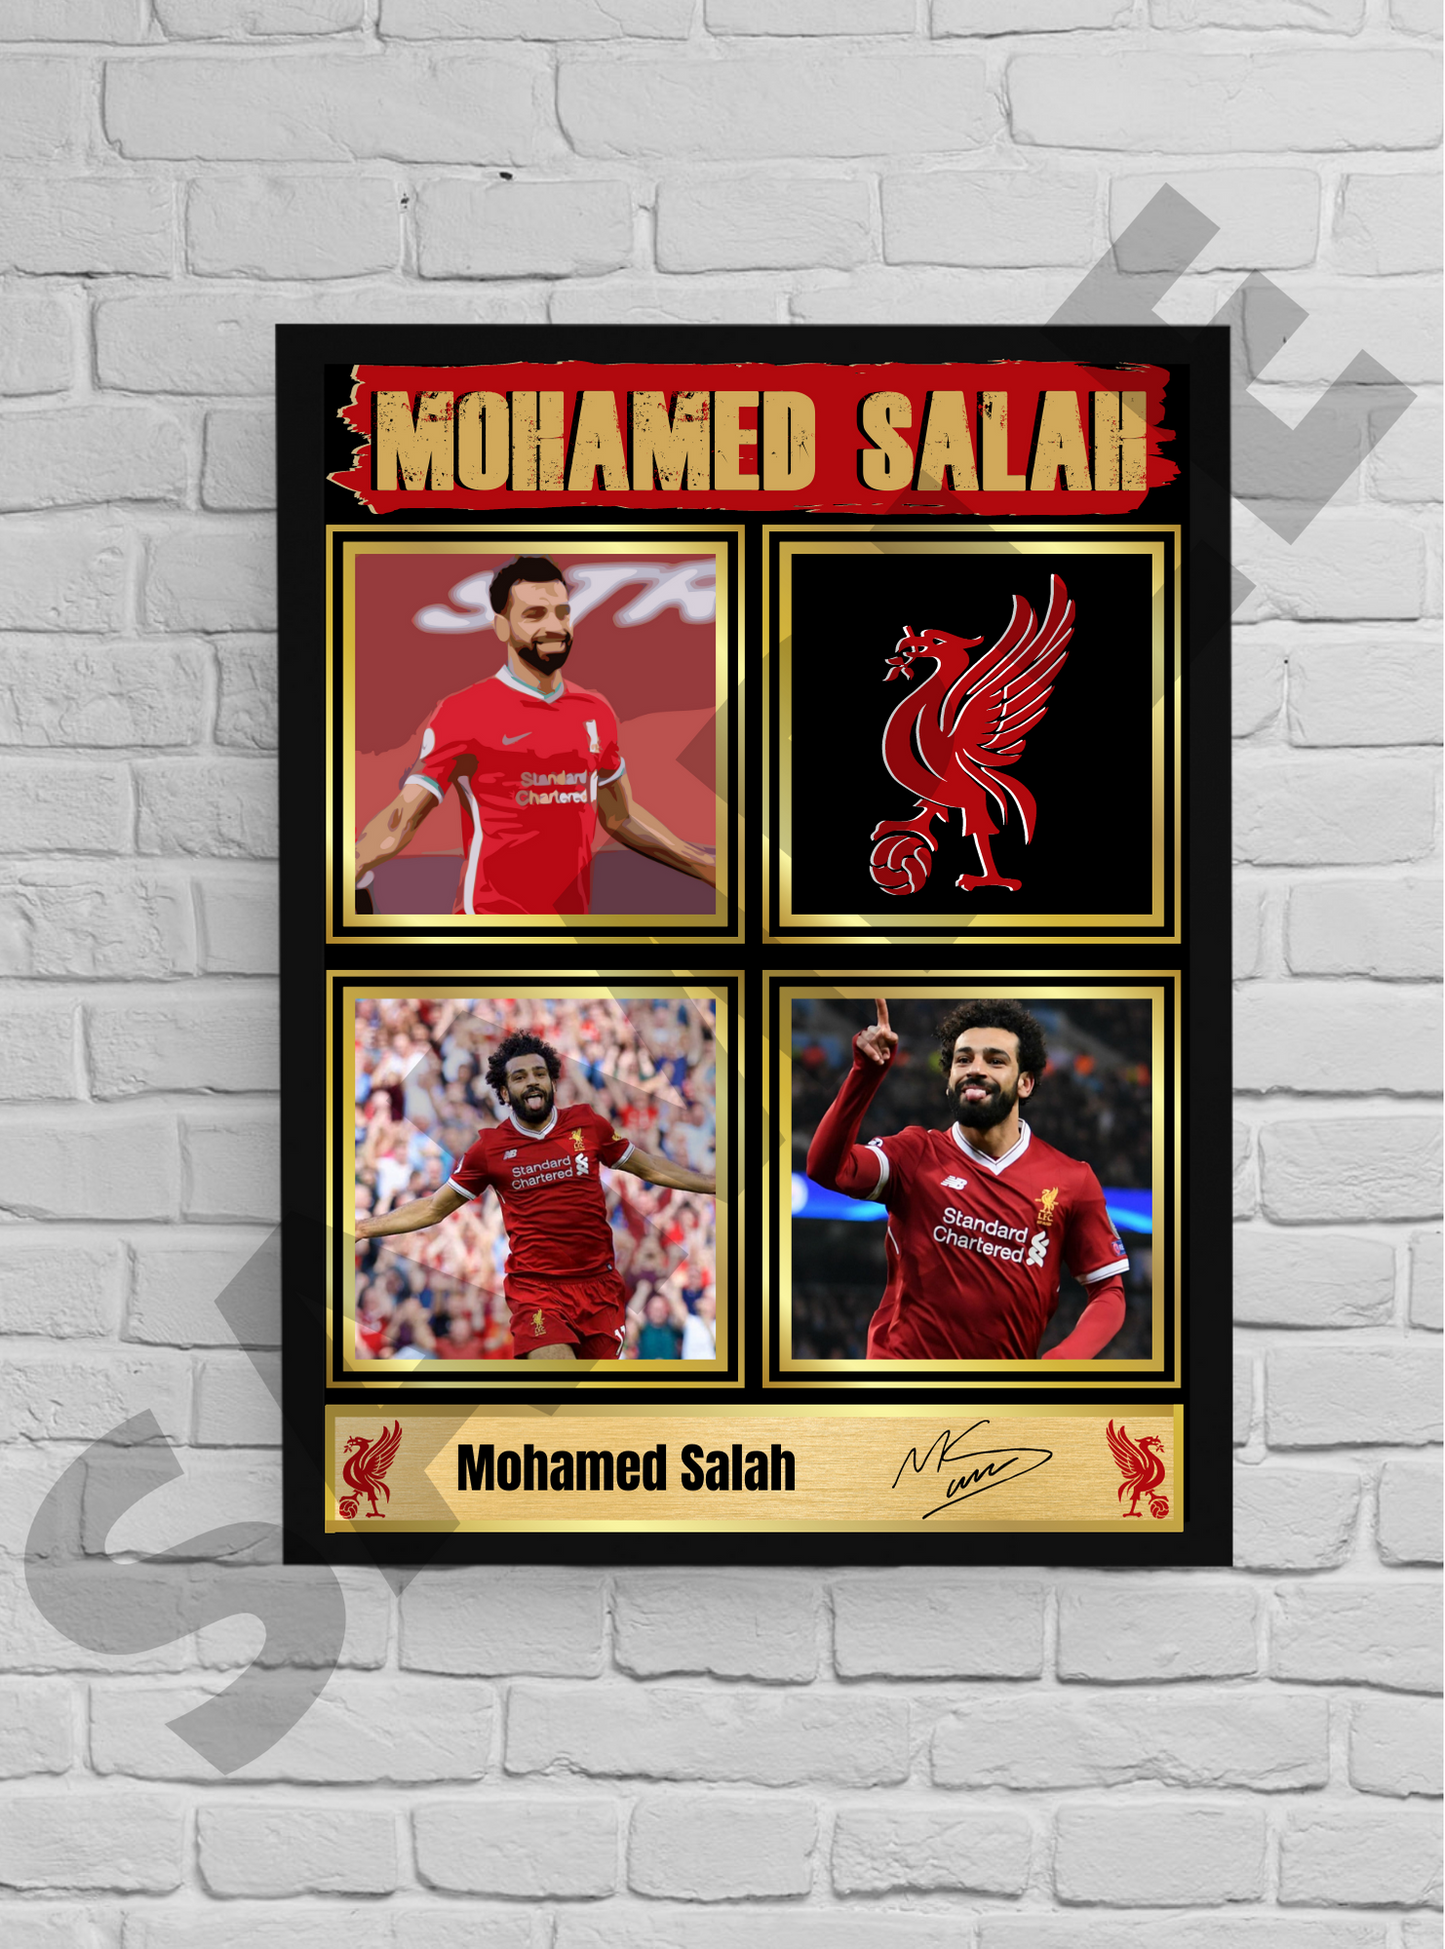 Mo Salah (Liverpool) #28 - Football Memorabilia/Collectible/Signed print